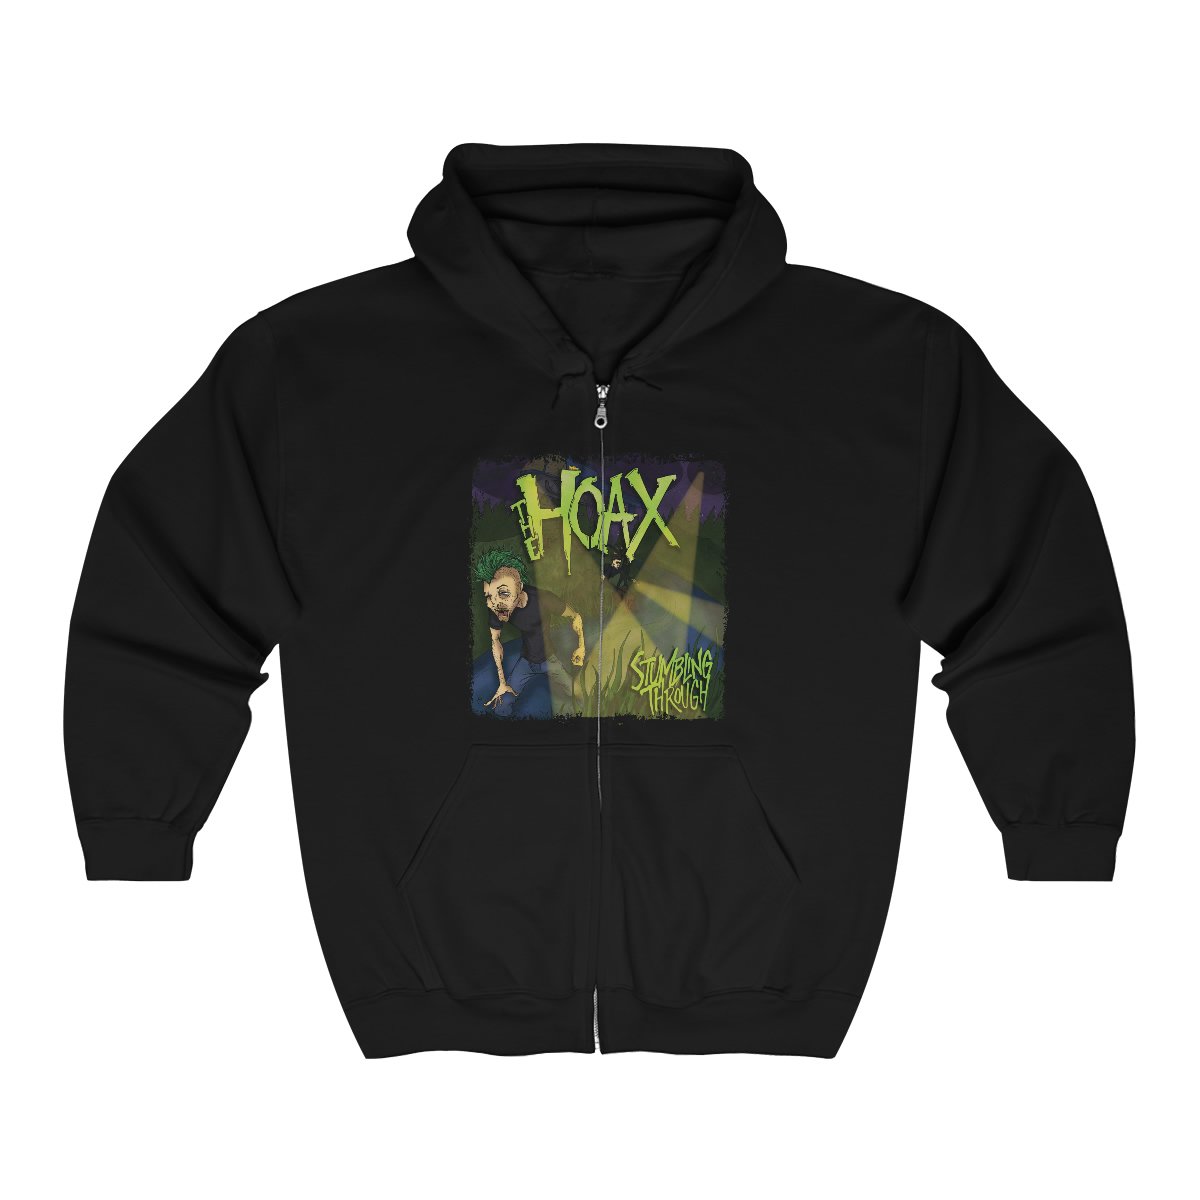 The Hoax – Stumbling Through (TPR) Full Zip Hooded Sweatshirt